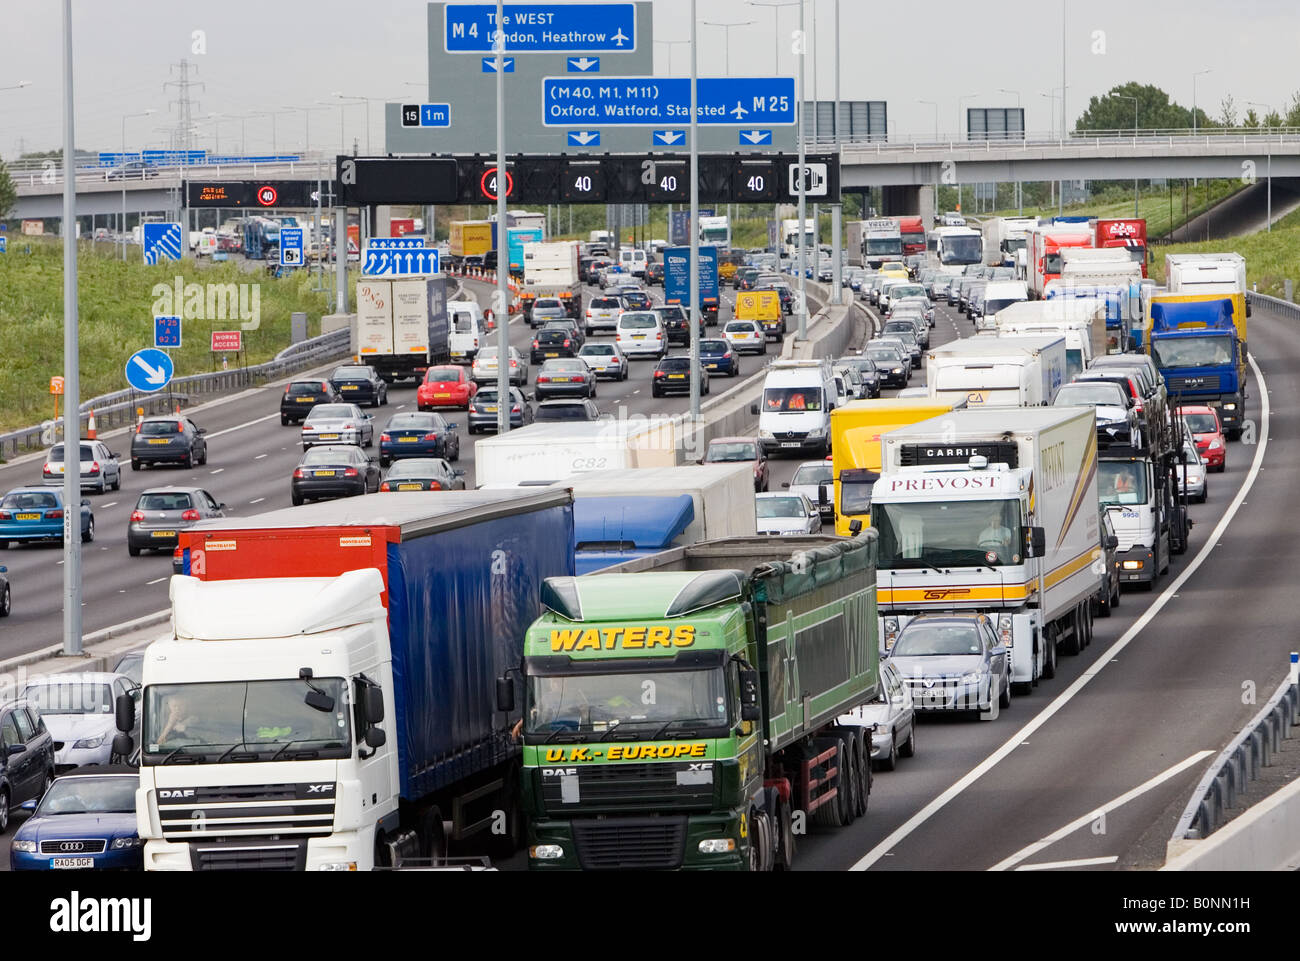 Heavy goods vehicles trucks in traffic congestion on M25 motorway London United Kingdom Stock Photo